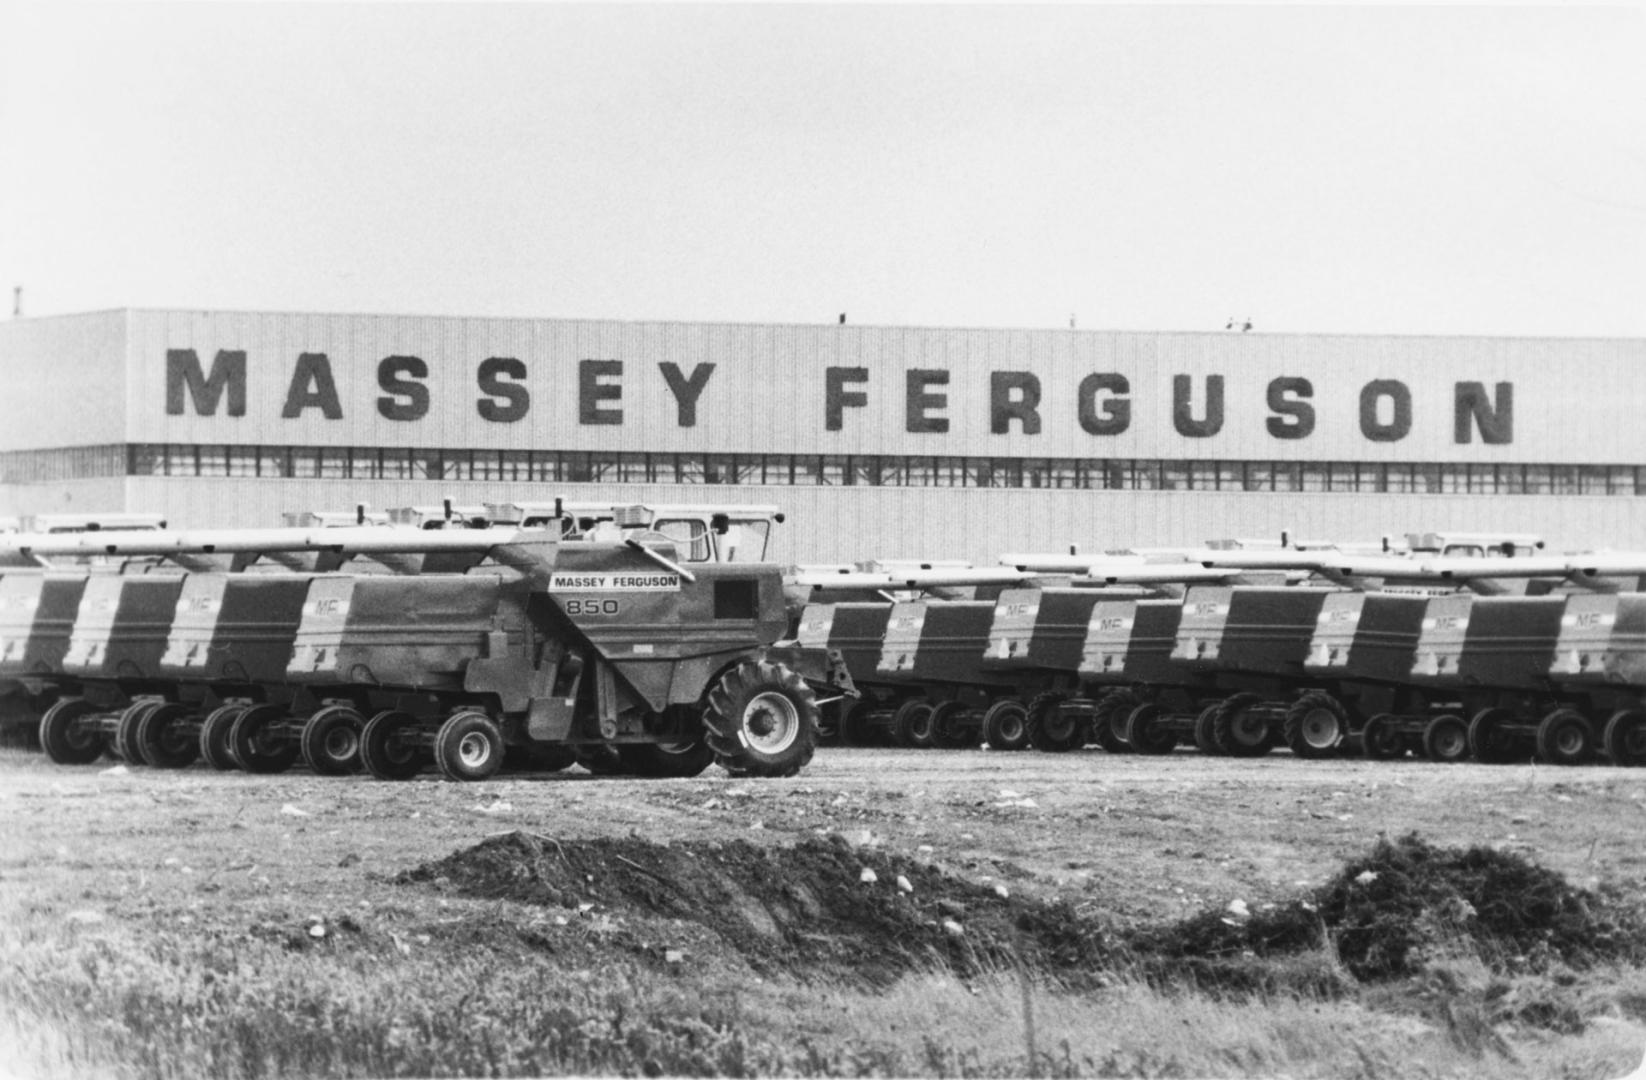 Unsold farm machinery stockpiled at the Massey Ferguson plant. Brantford, Ontario